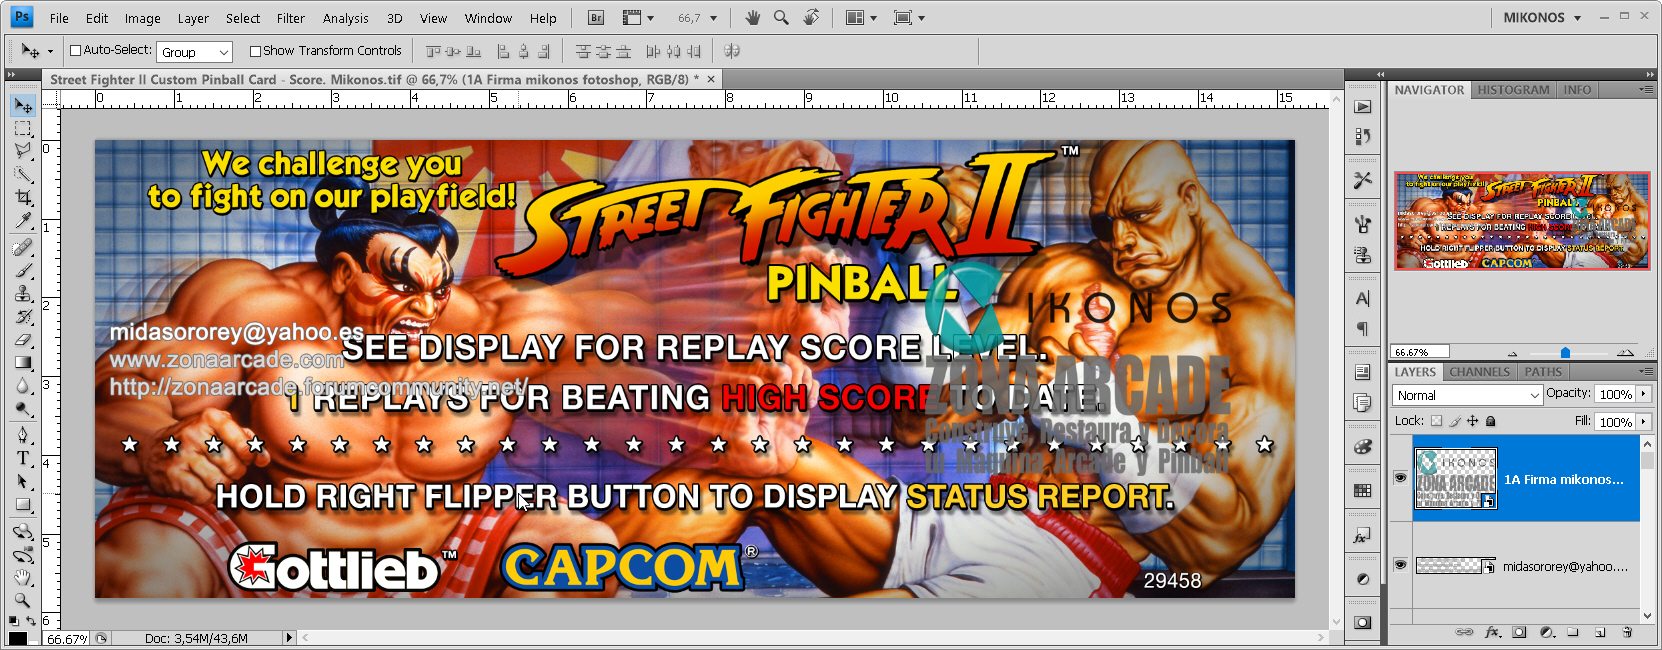 Street Fighter II Custom Pinball Card - Score. Mikonos1